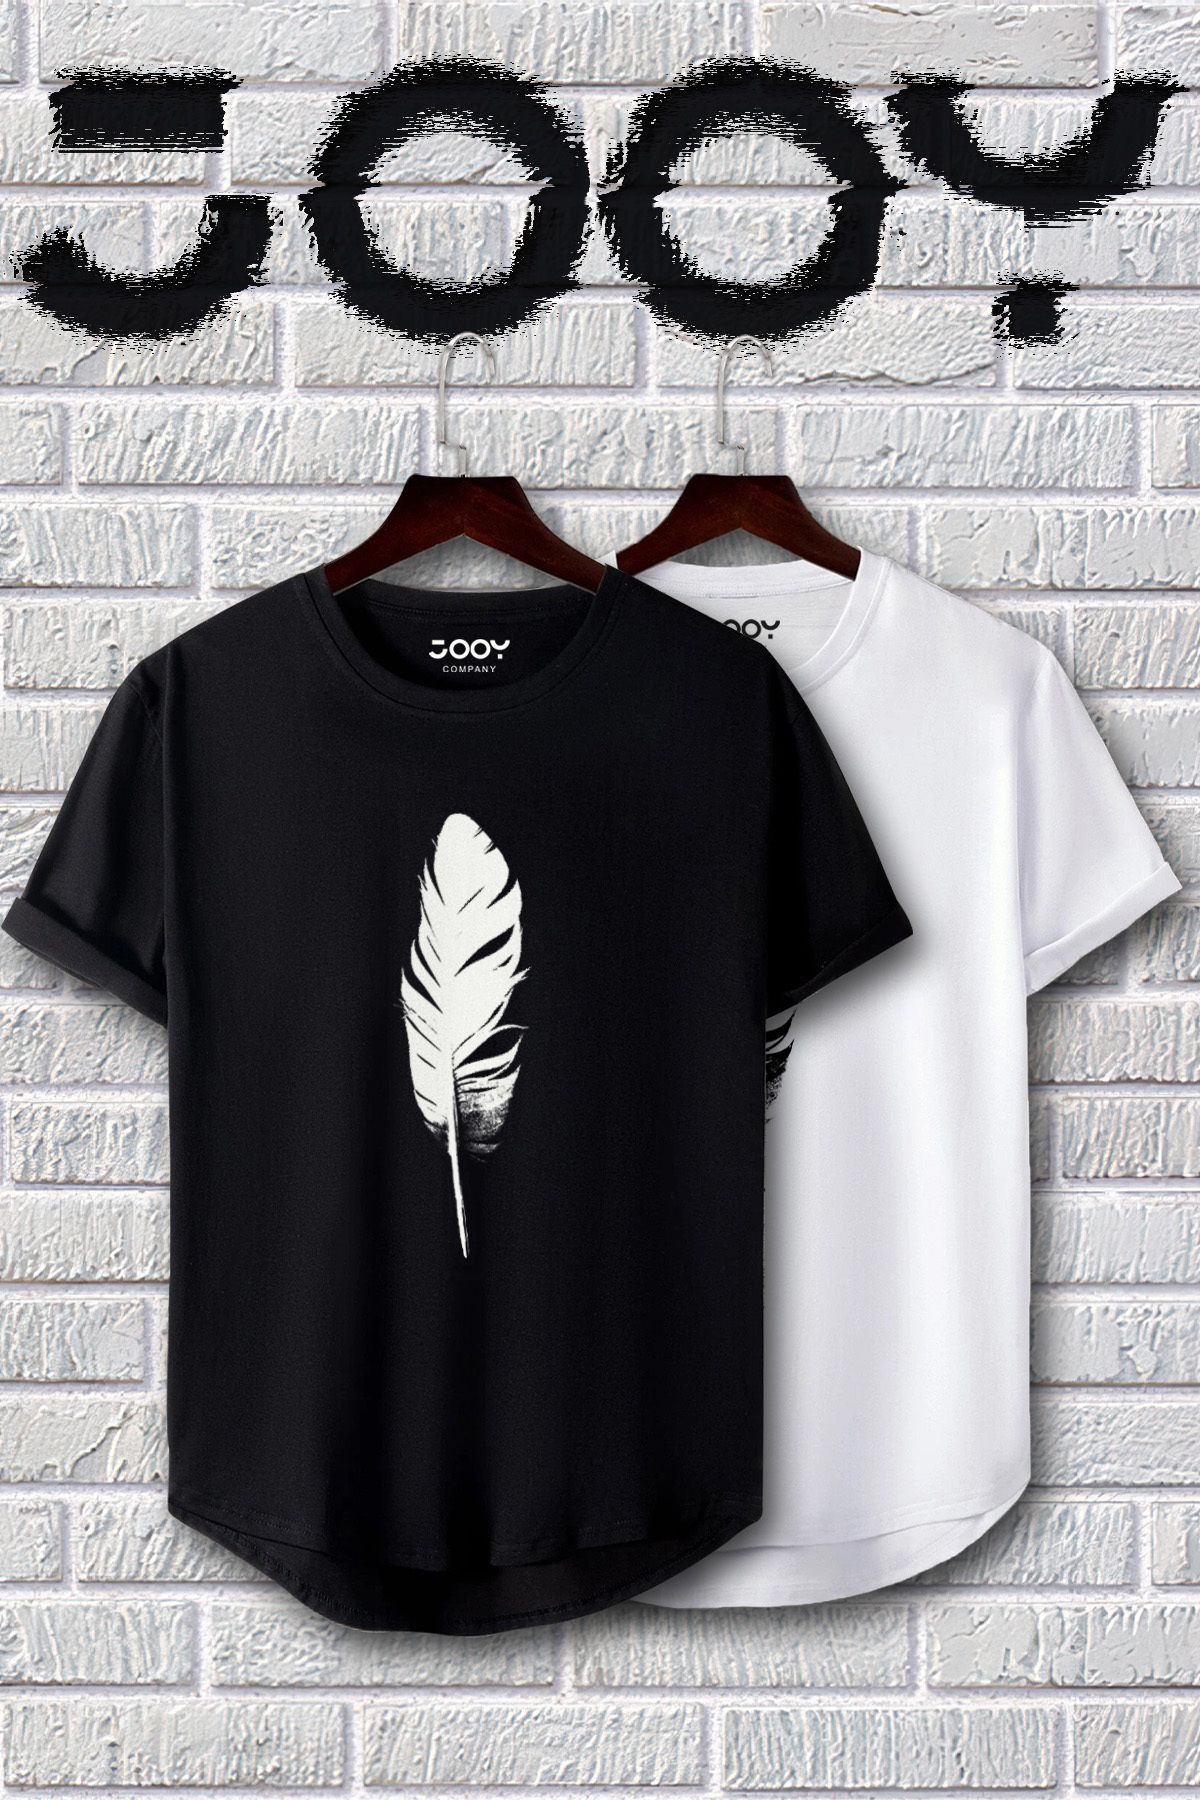 Unisex Siyah Beyaz Oval Kesim Tüy Tasarım Tshirt Ikili Set